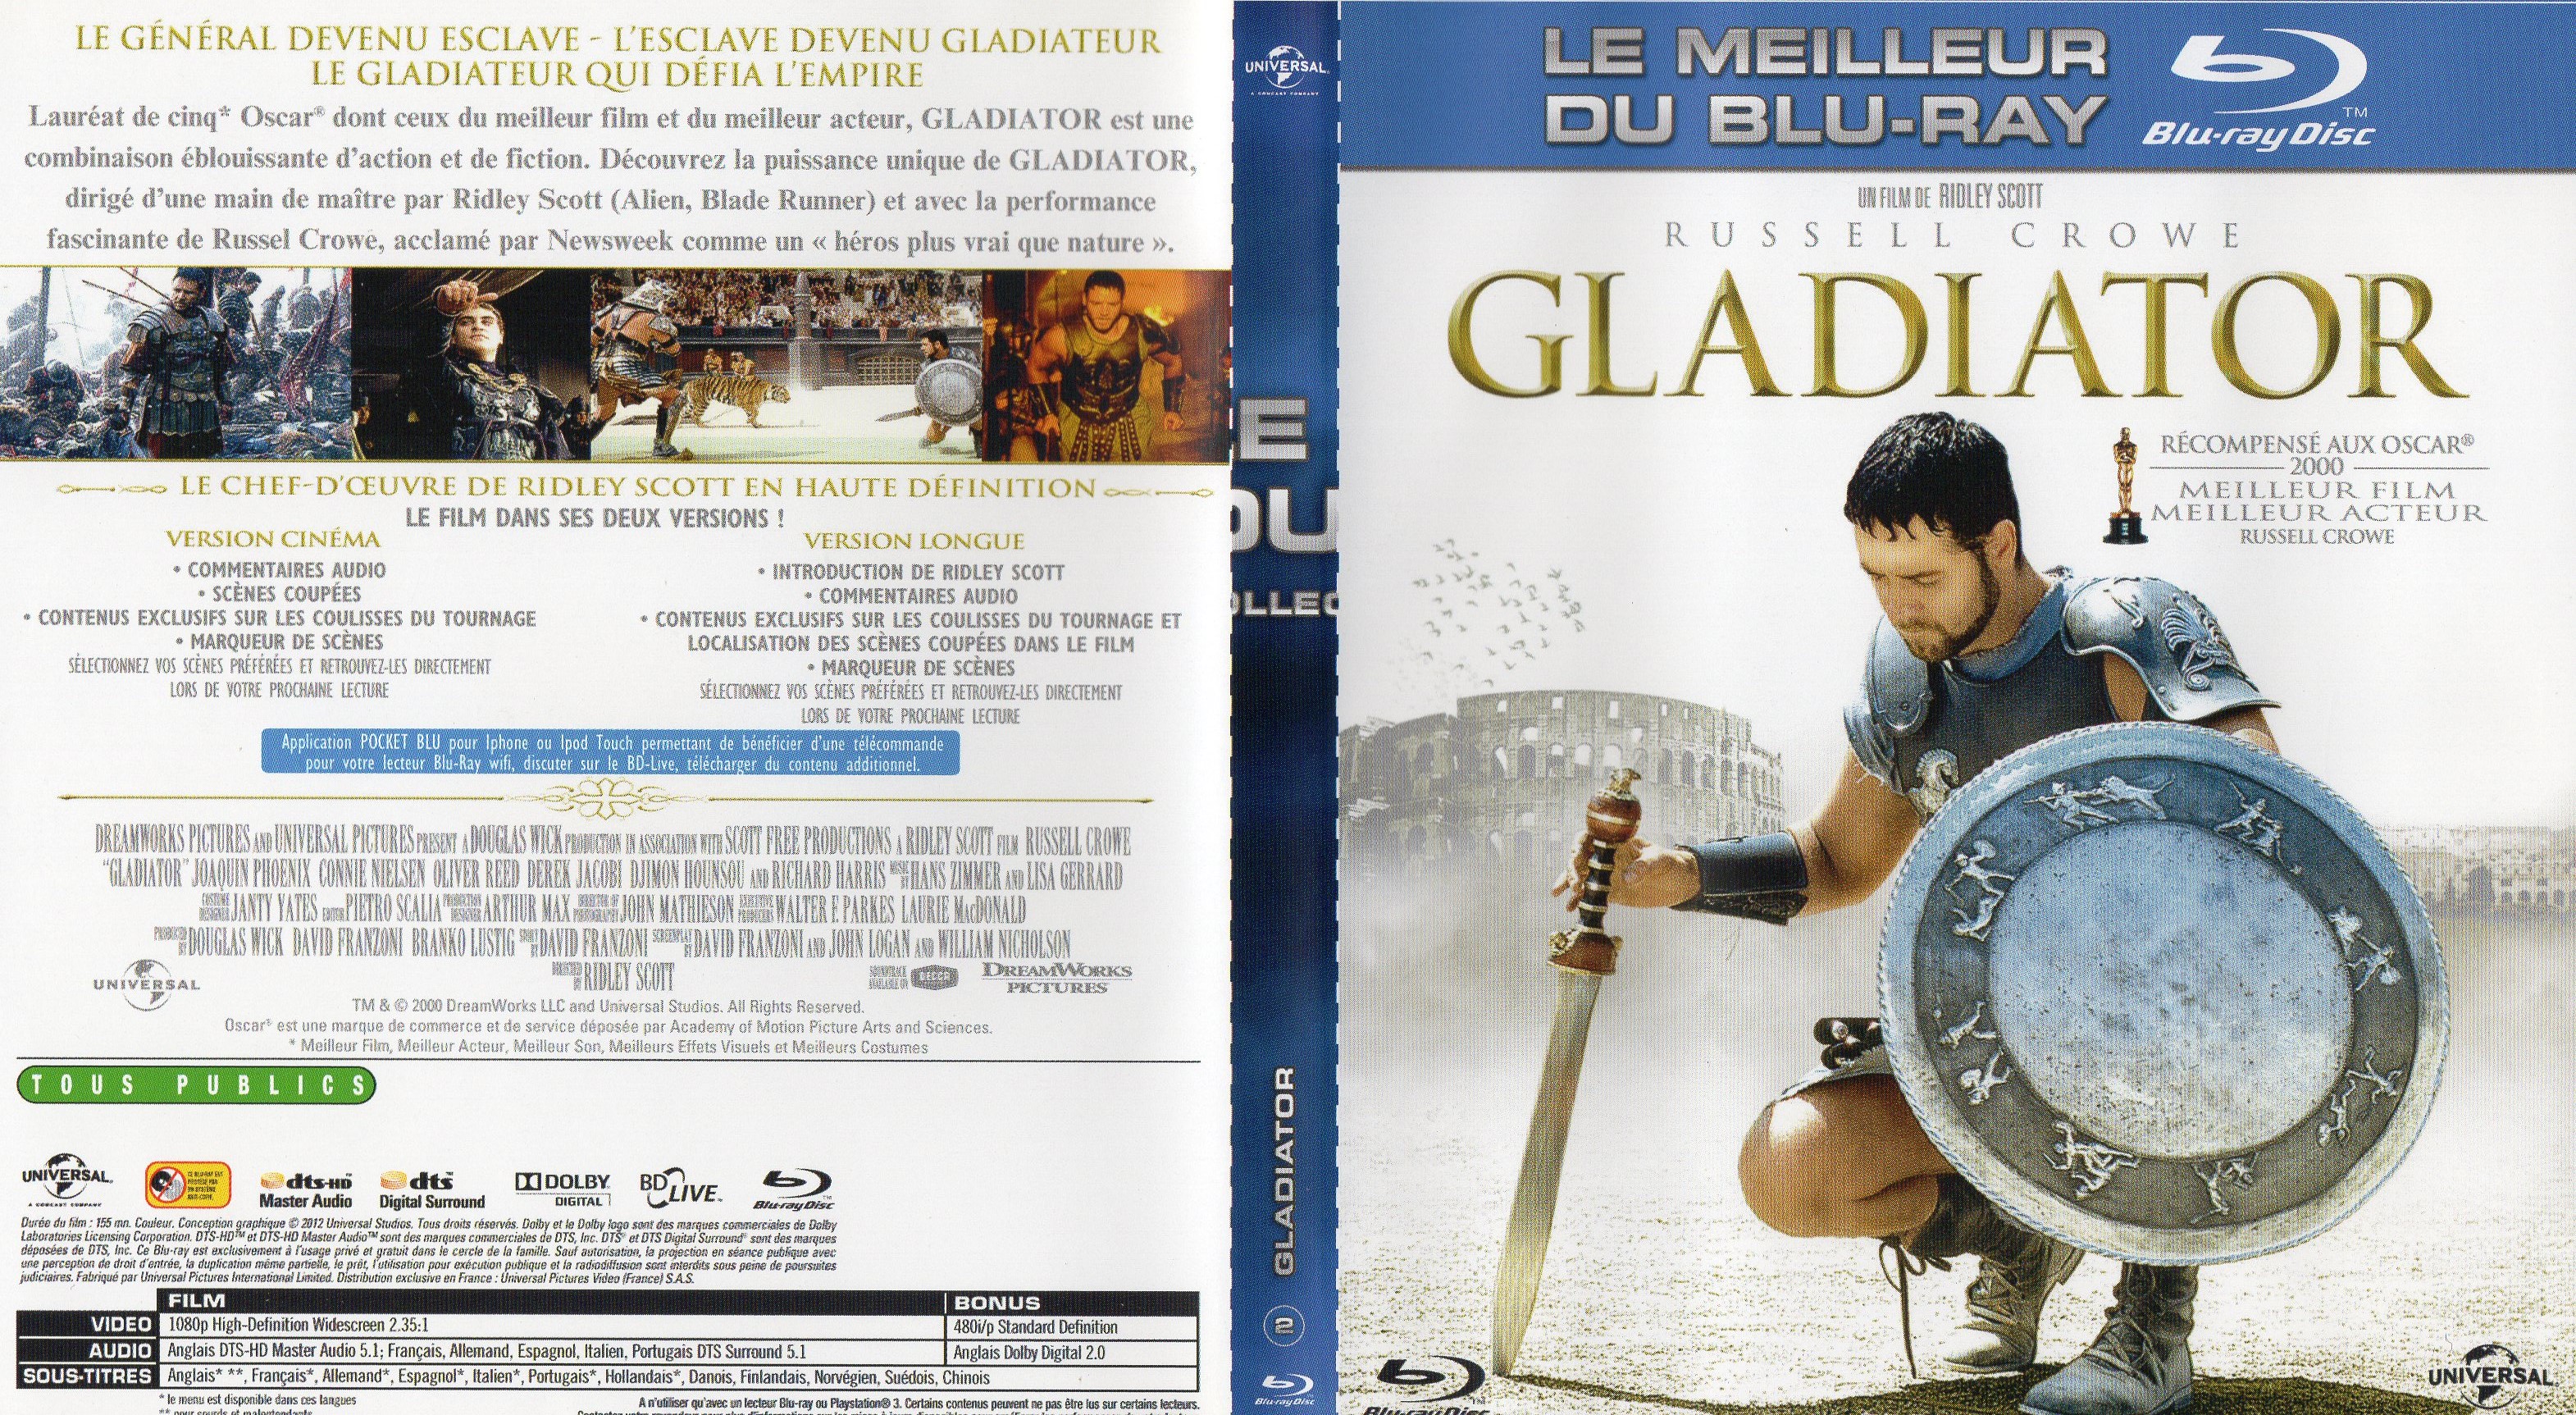 Jaquette DVD Gladiator (BLU-RAY) v4